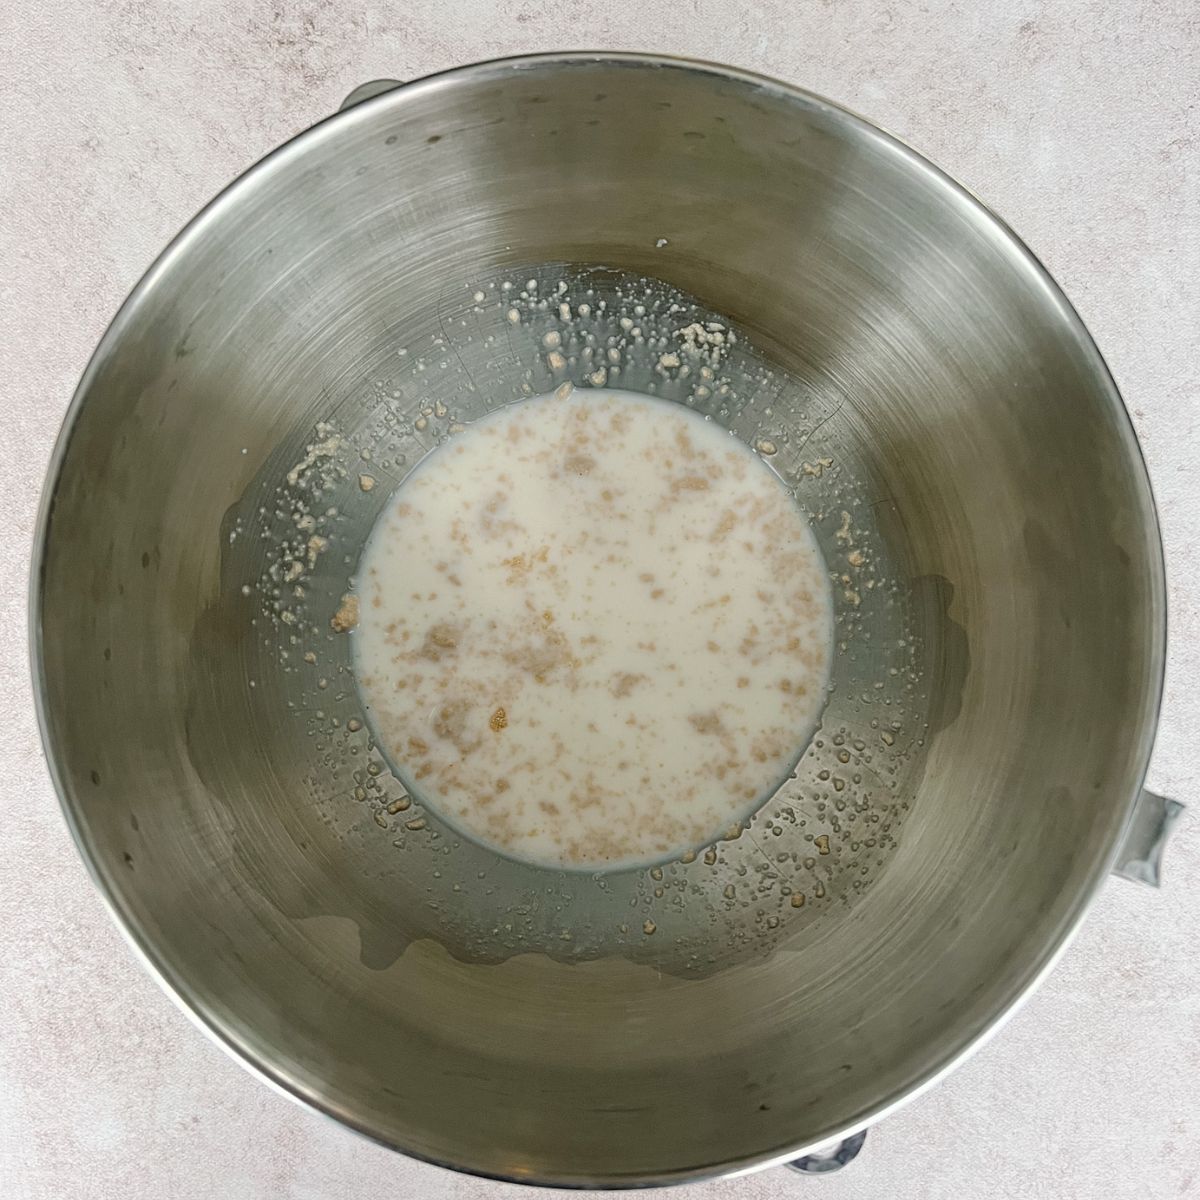 Step One: Yeast, sugar, warm milk in mixing bowl.